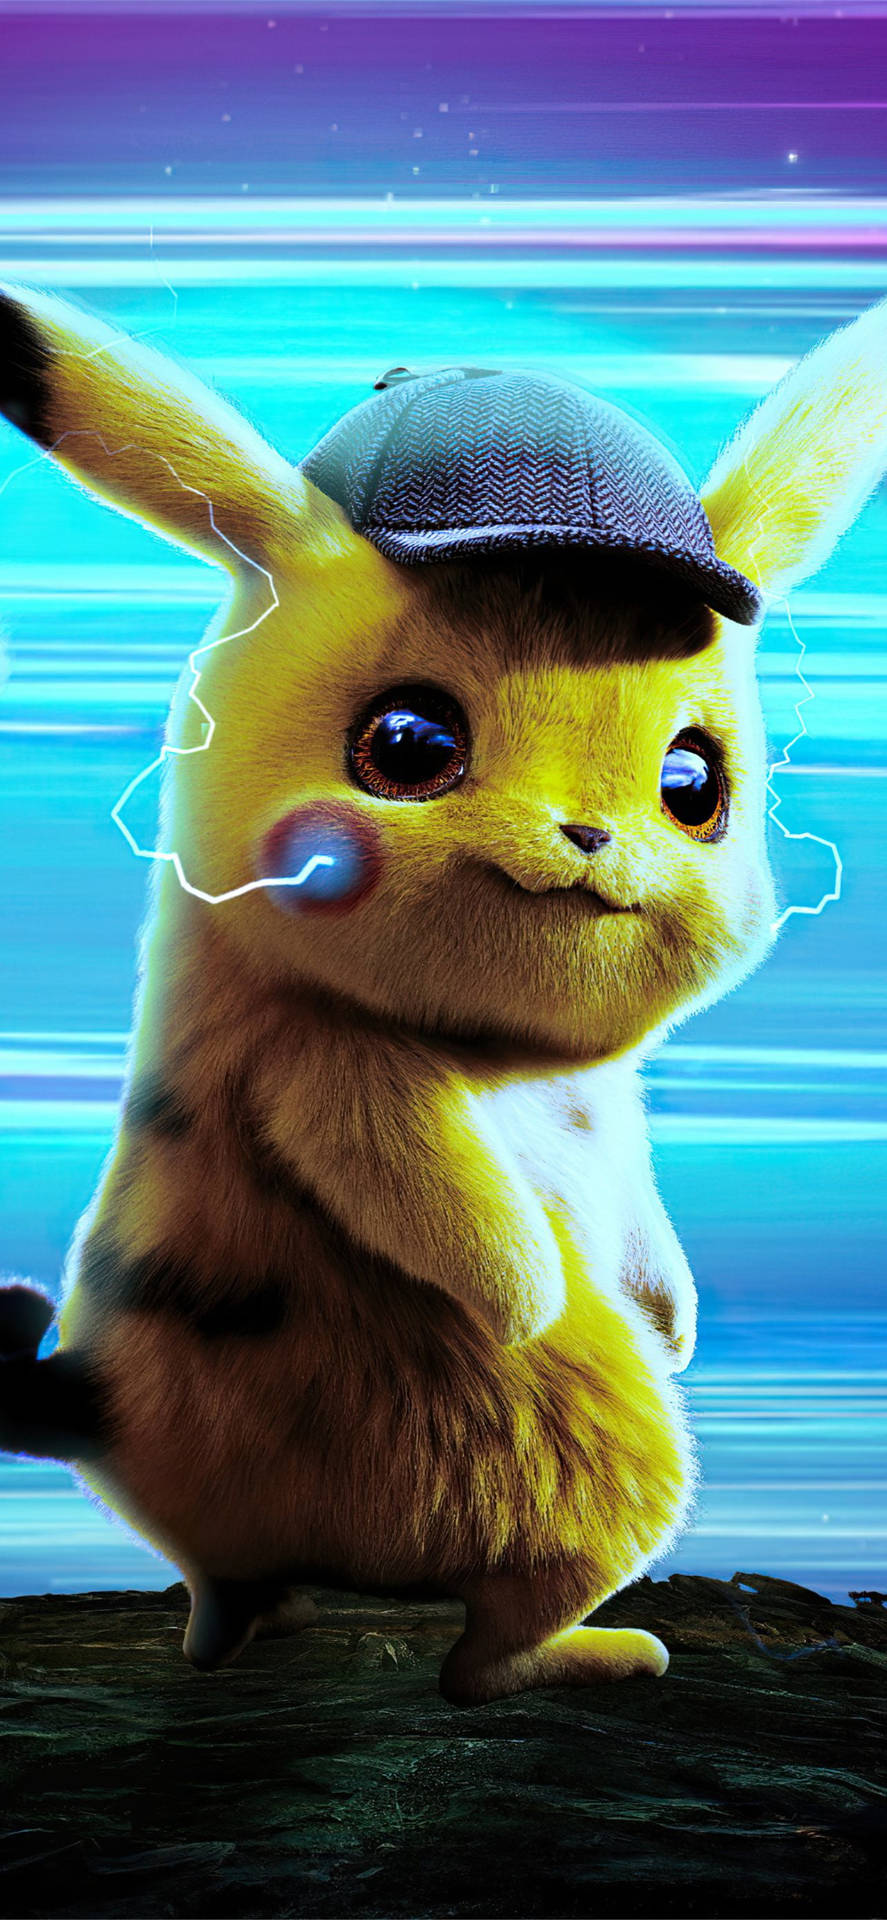 Download Pikachu Full Length Photo Wallpaper 